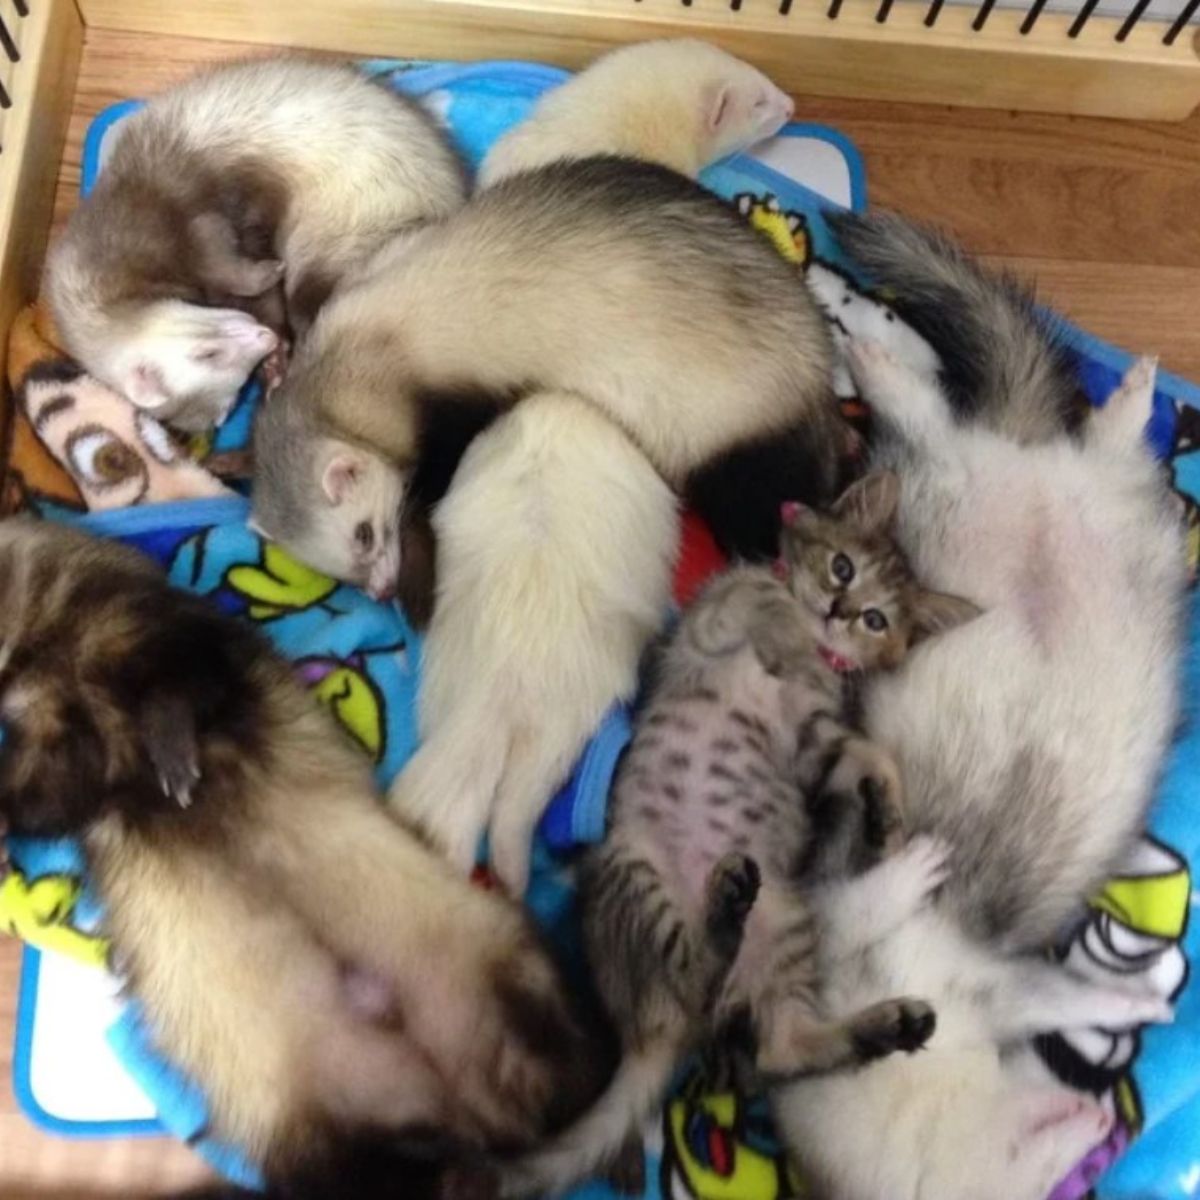 tiny kitten lying with ferrets